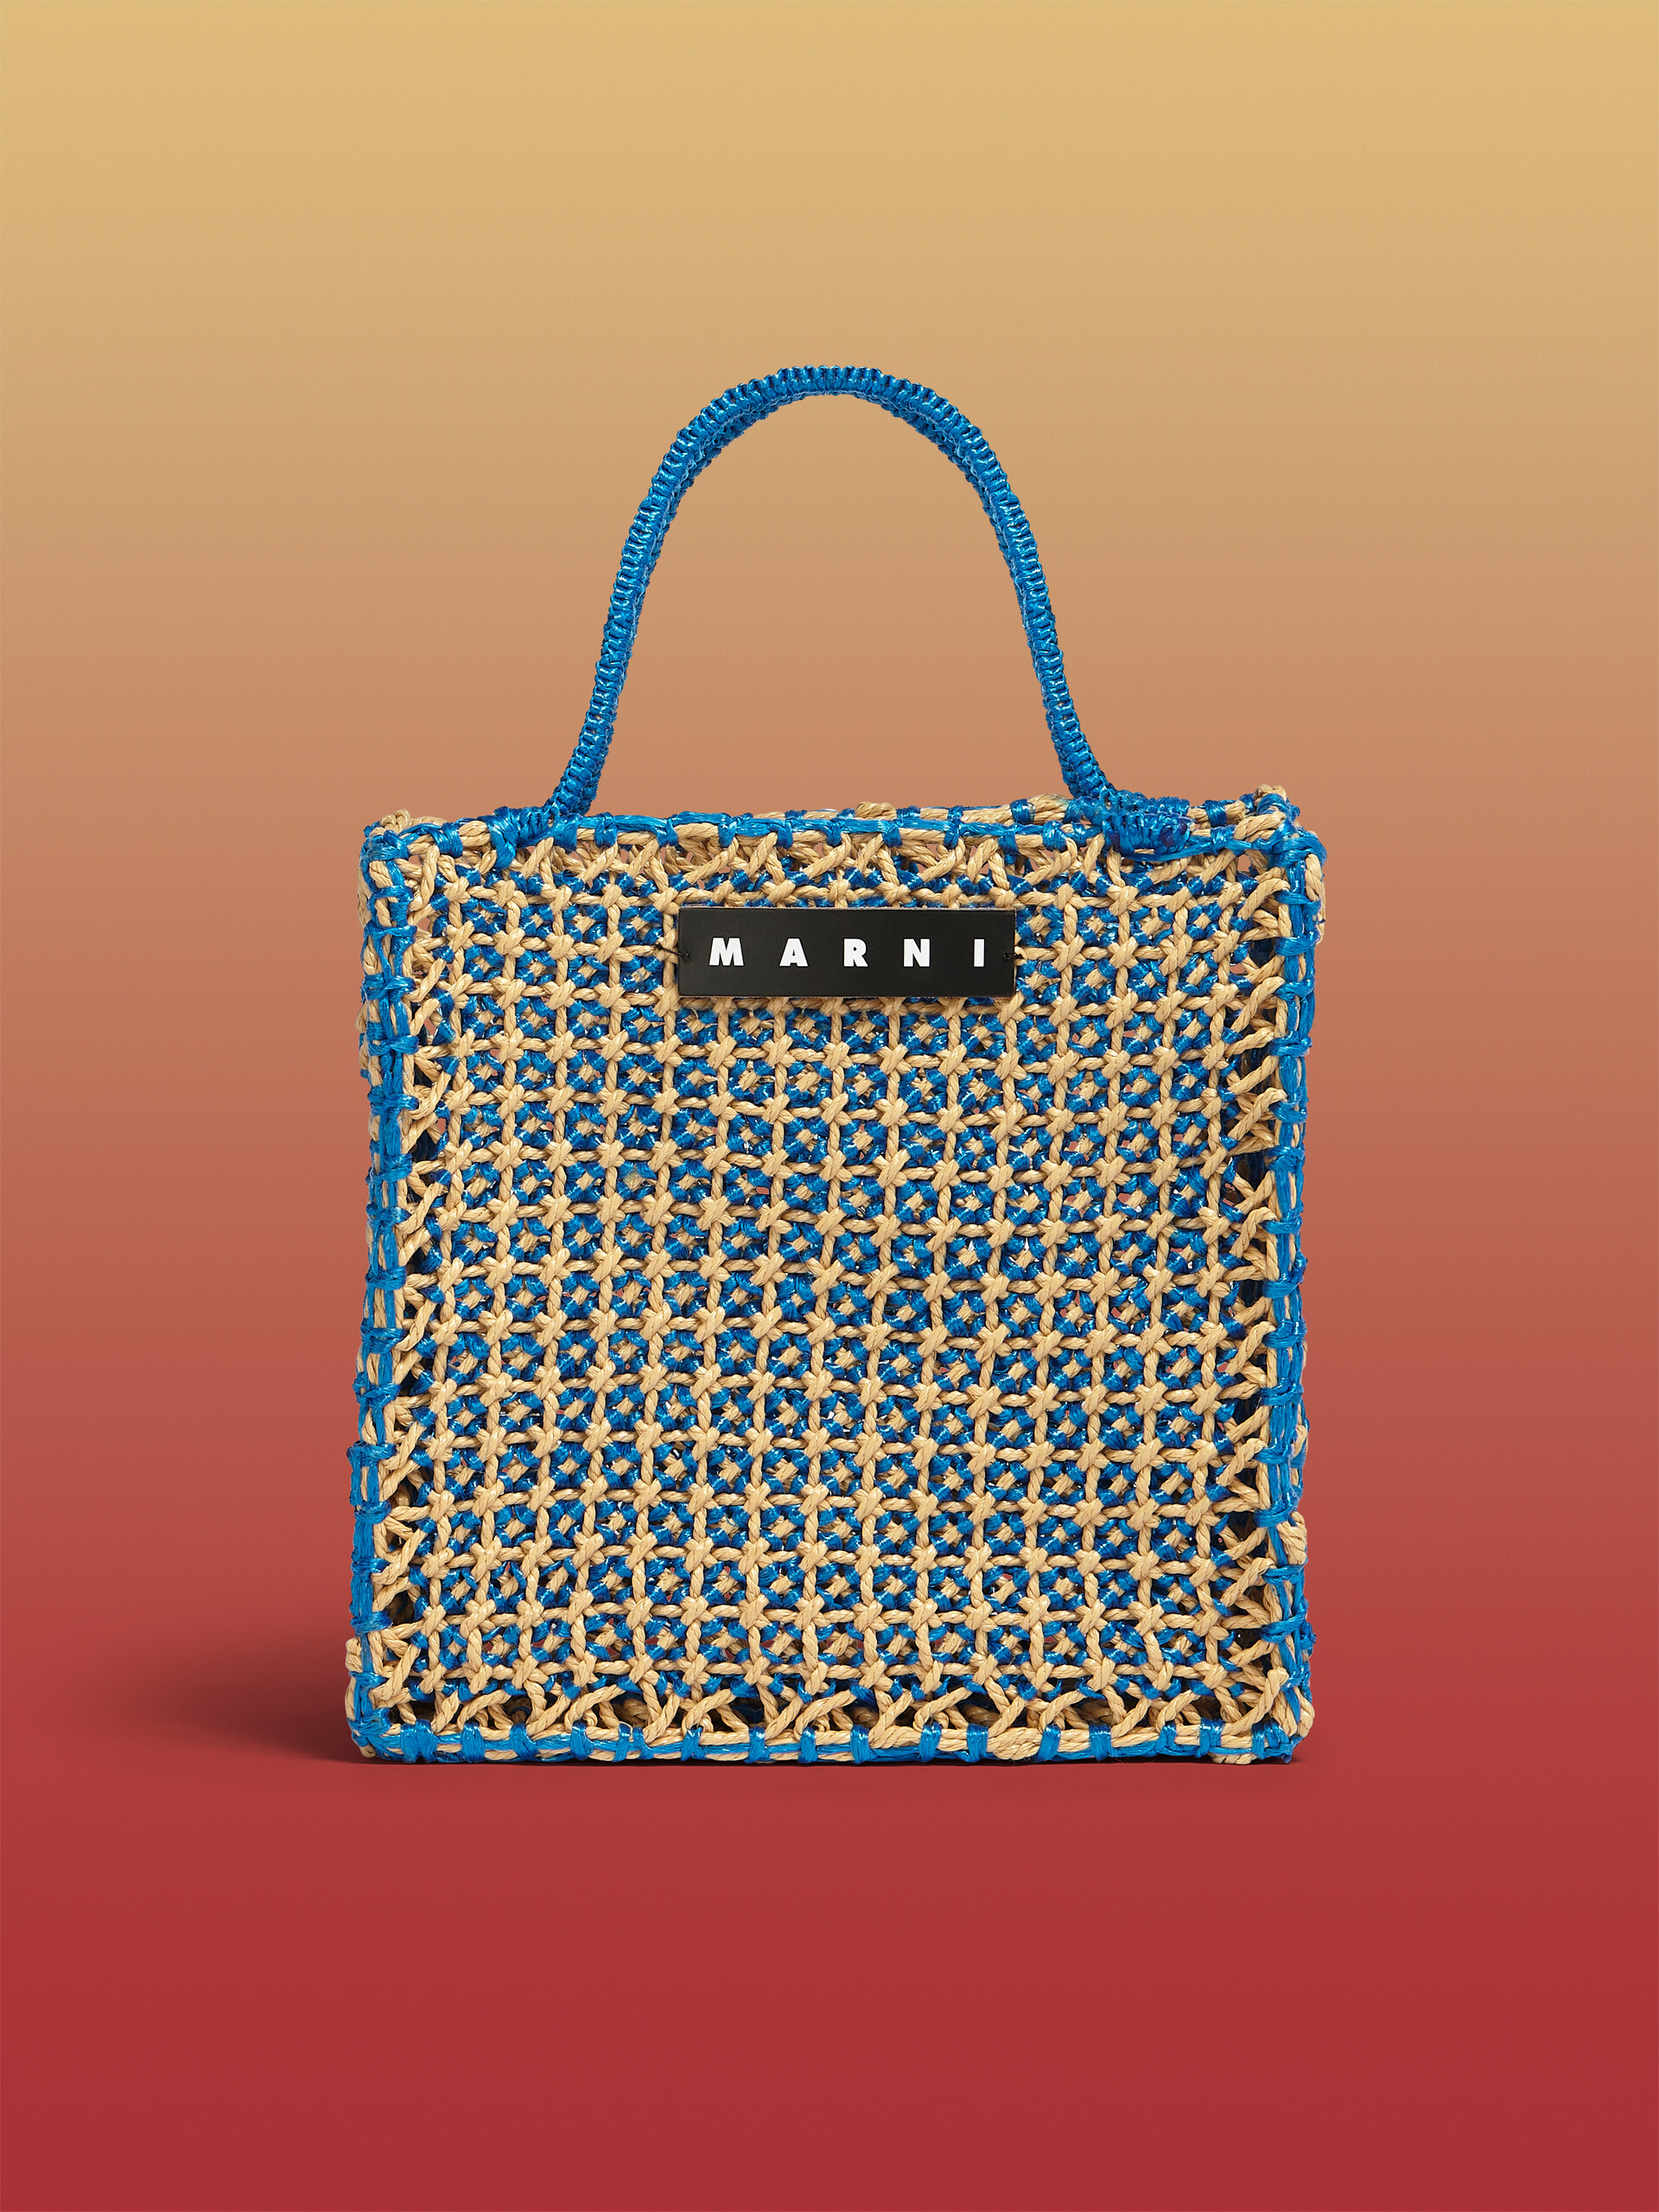 MARNI MARKET JURTA large bag in pale blue and beige crochet - Shopping Bags - Image 1